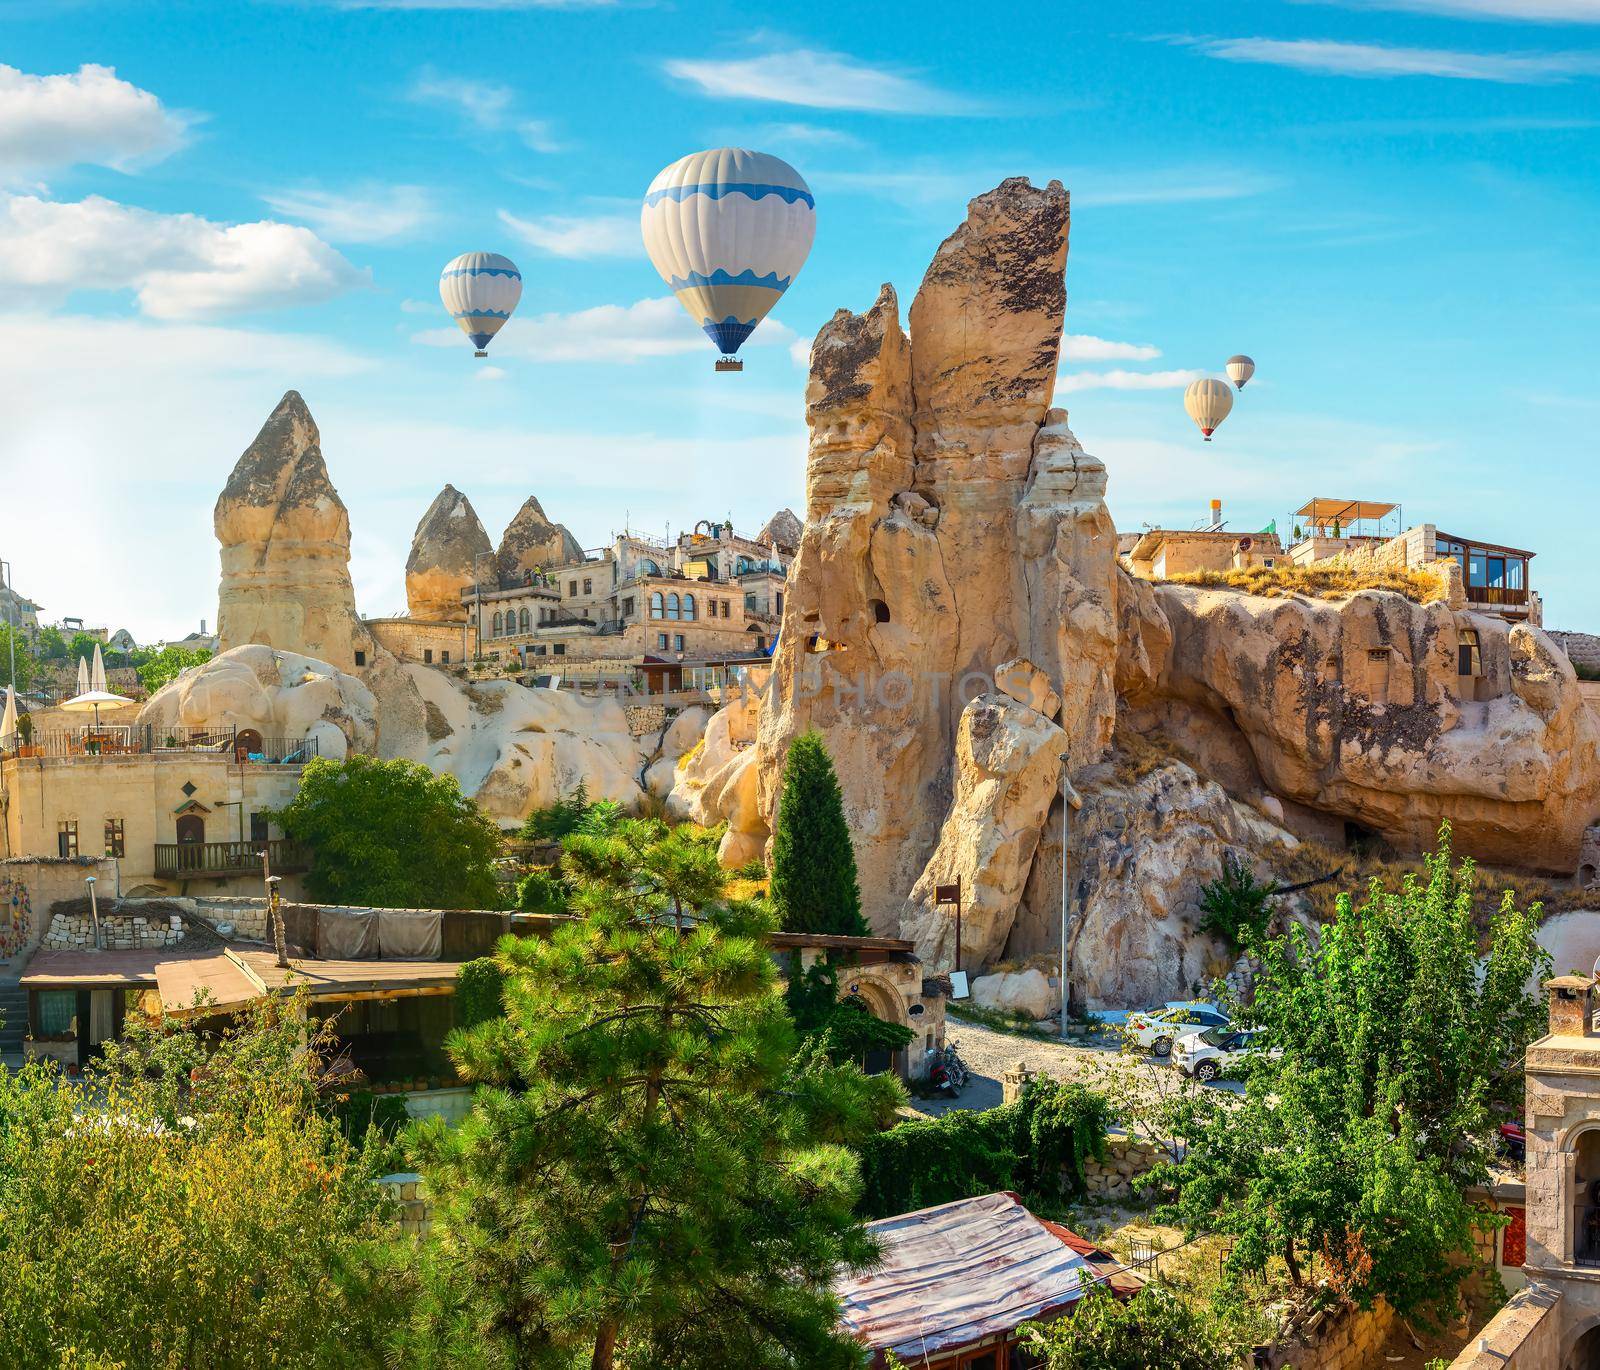 Hot air balloons at day in Goreme village, Cappadocia, Turkey